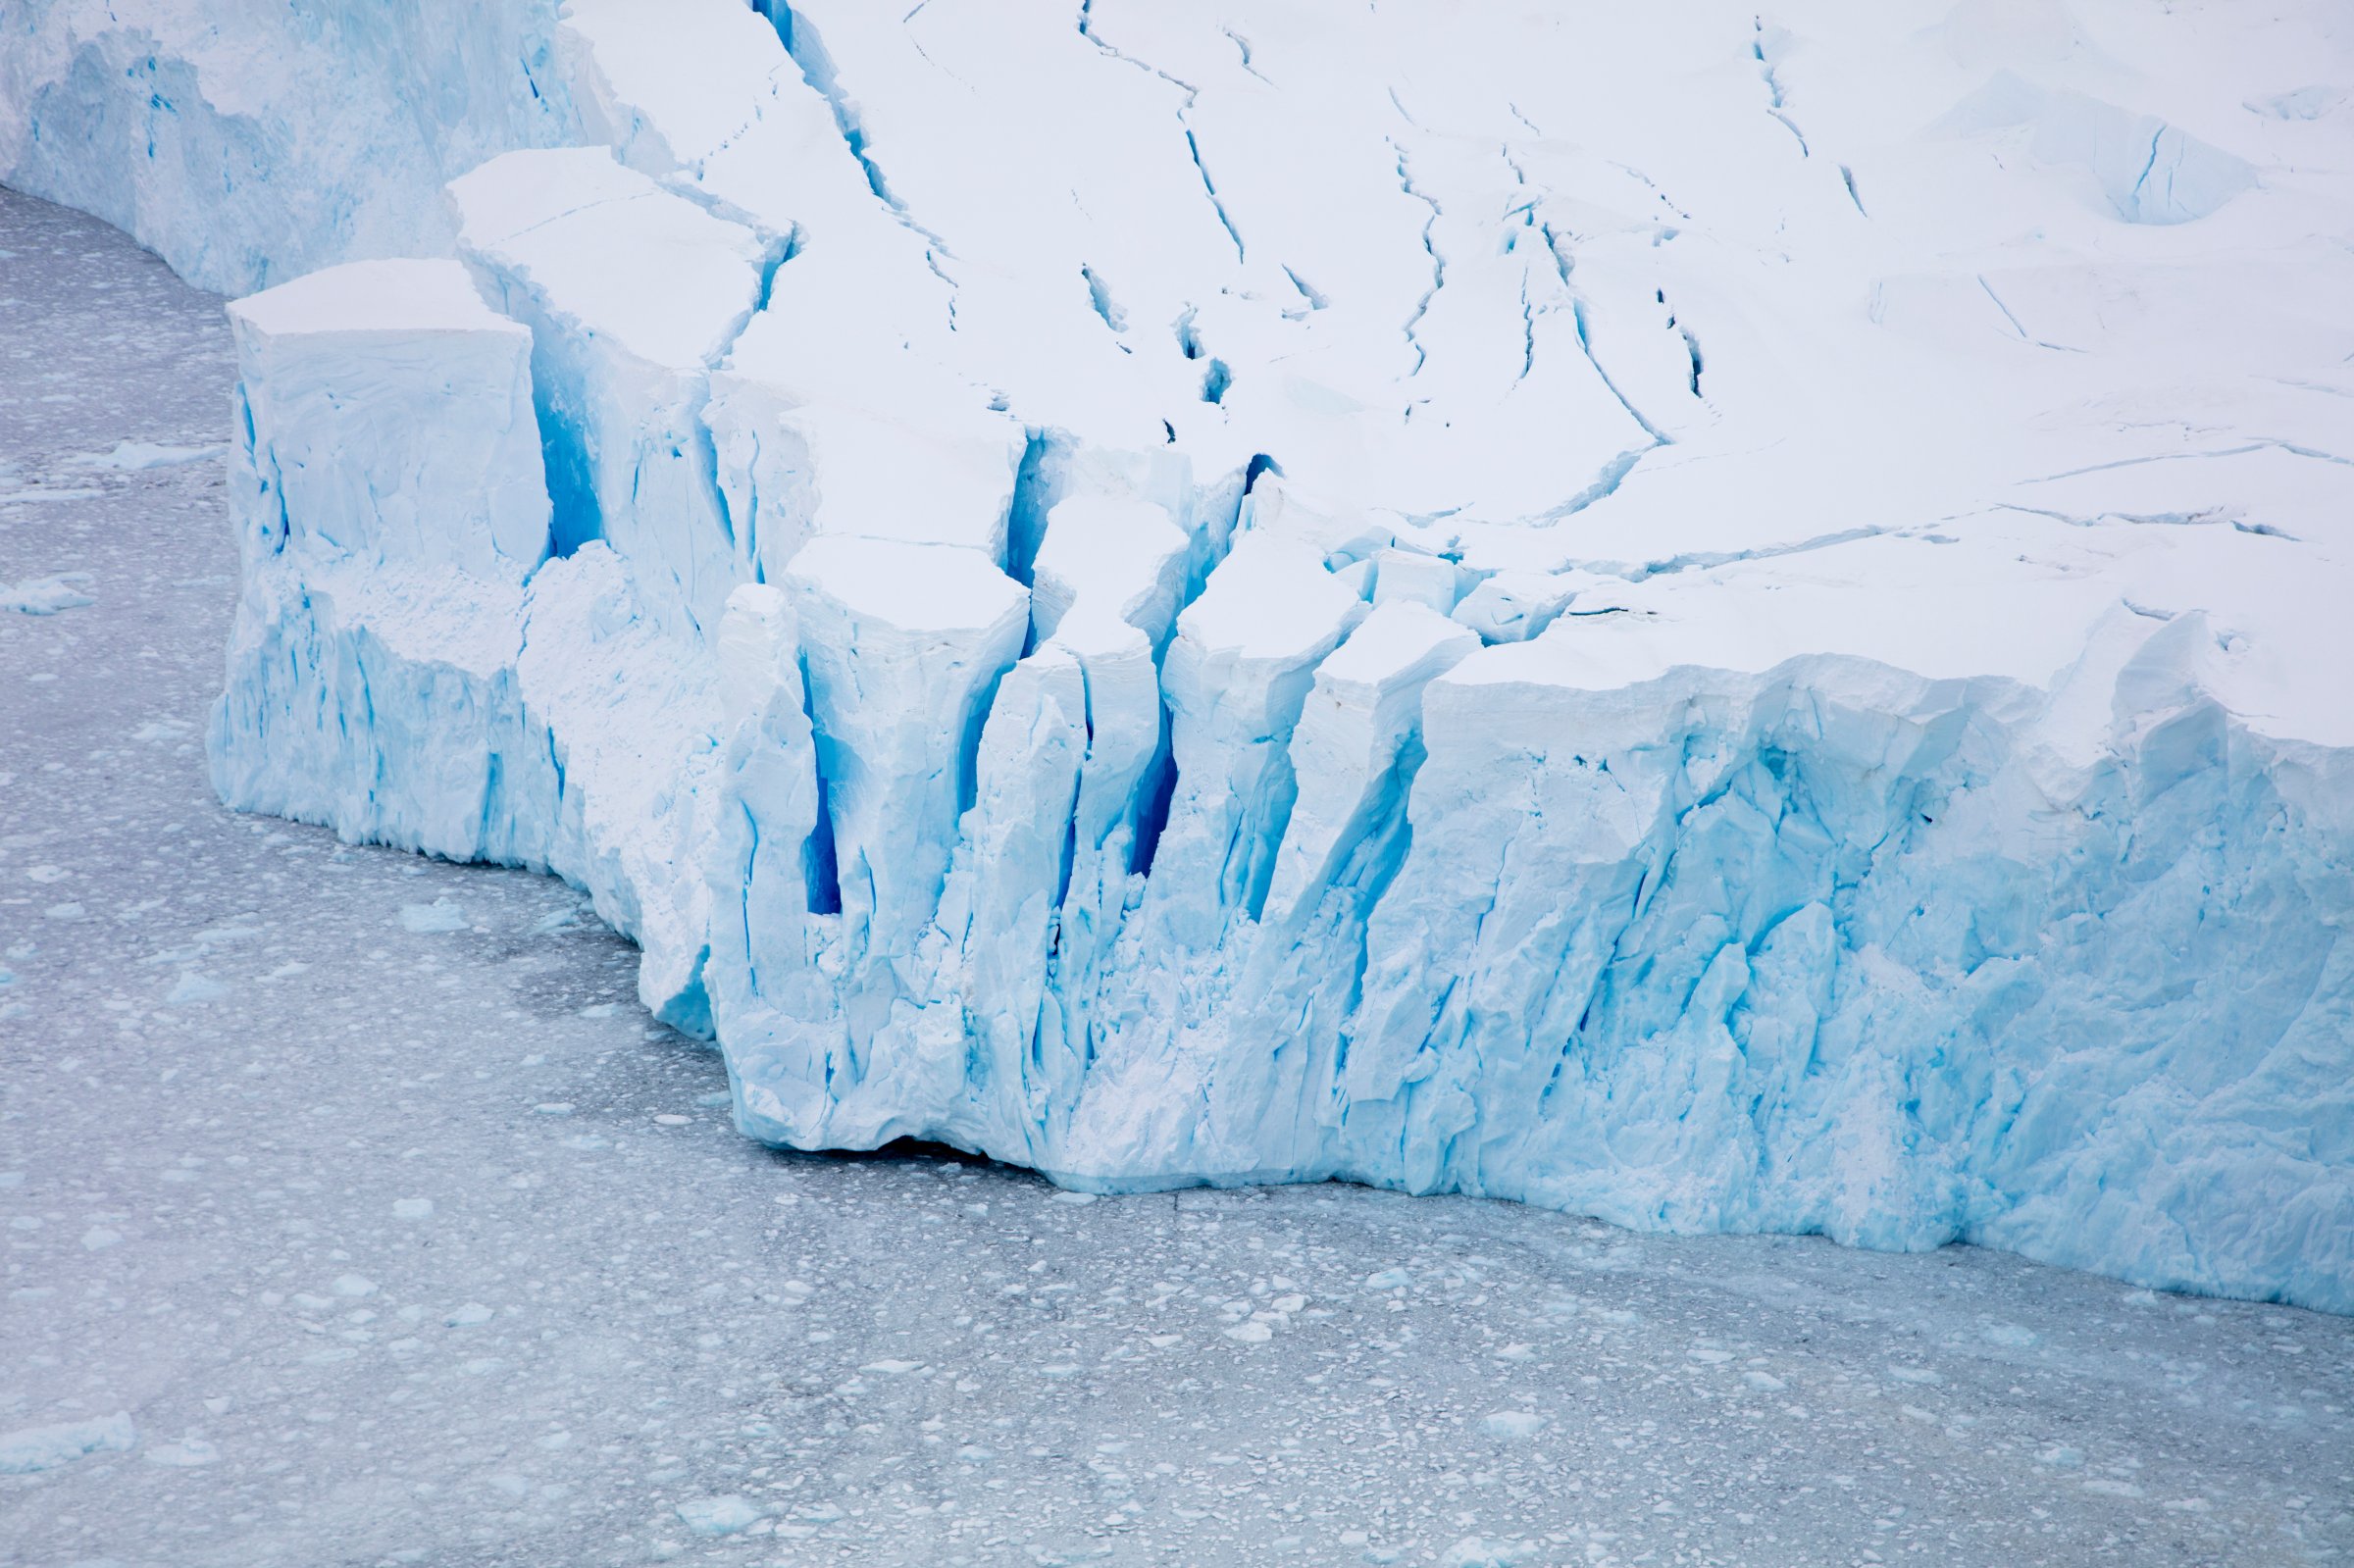 Overhead of glacier shelf with blue ice